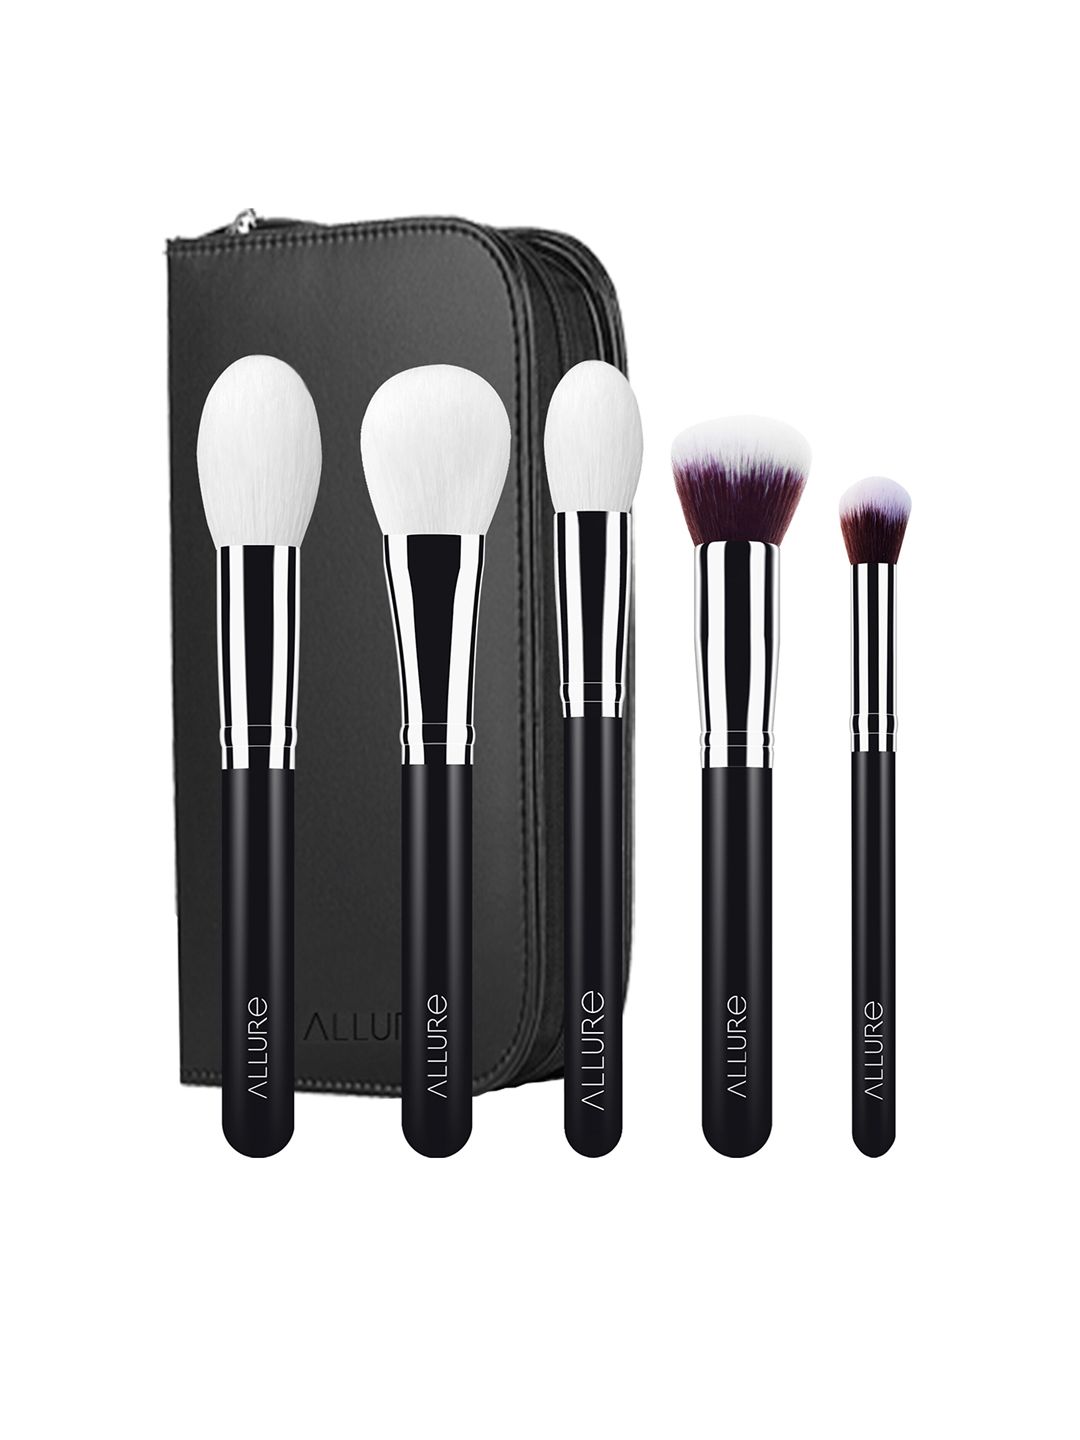 ALLURE SGKF-05 Set of 5 Face Makeup Brushes - Black Price in India